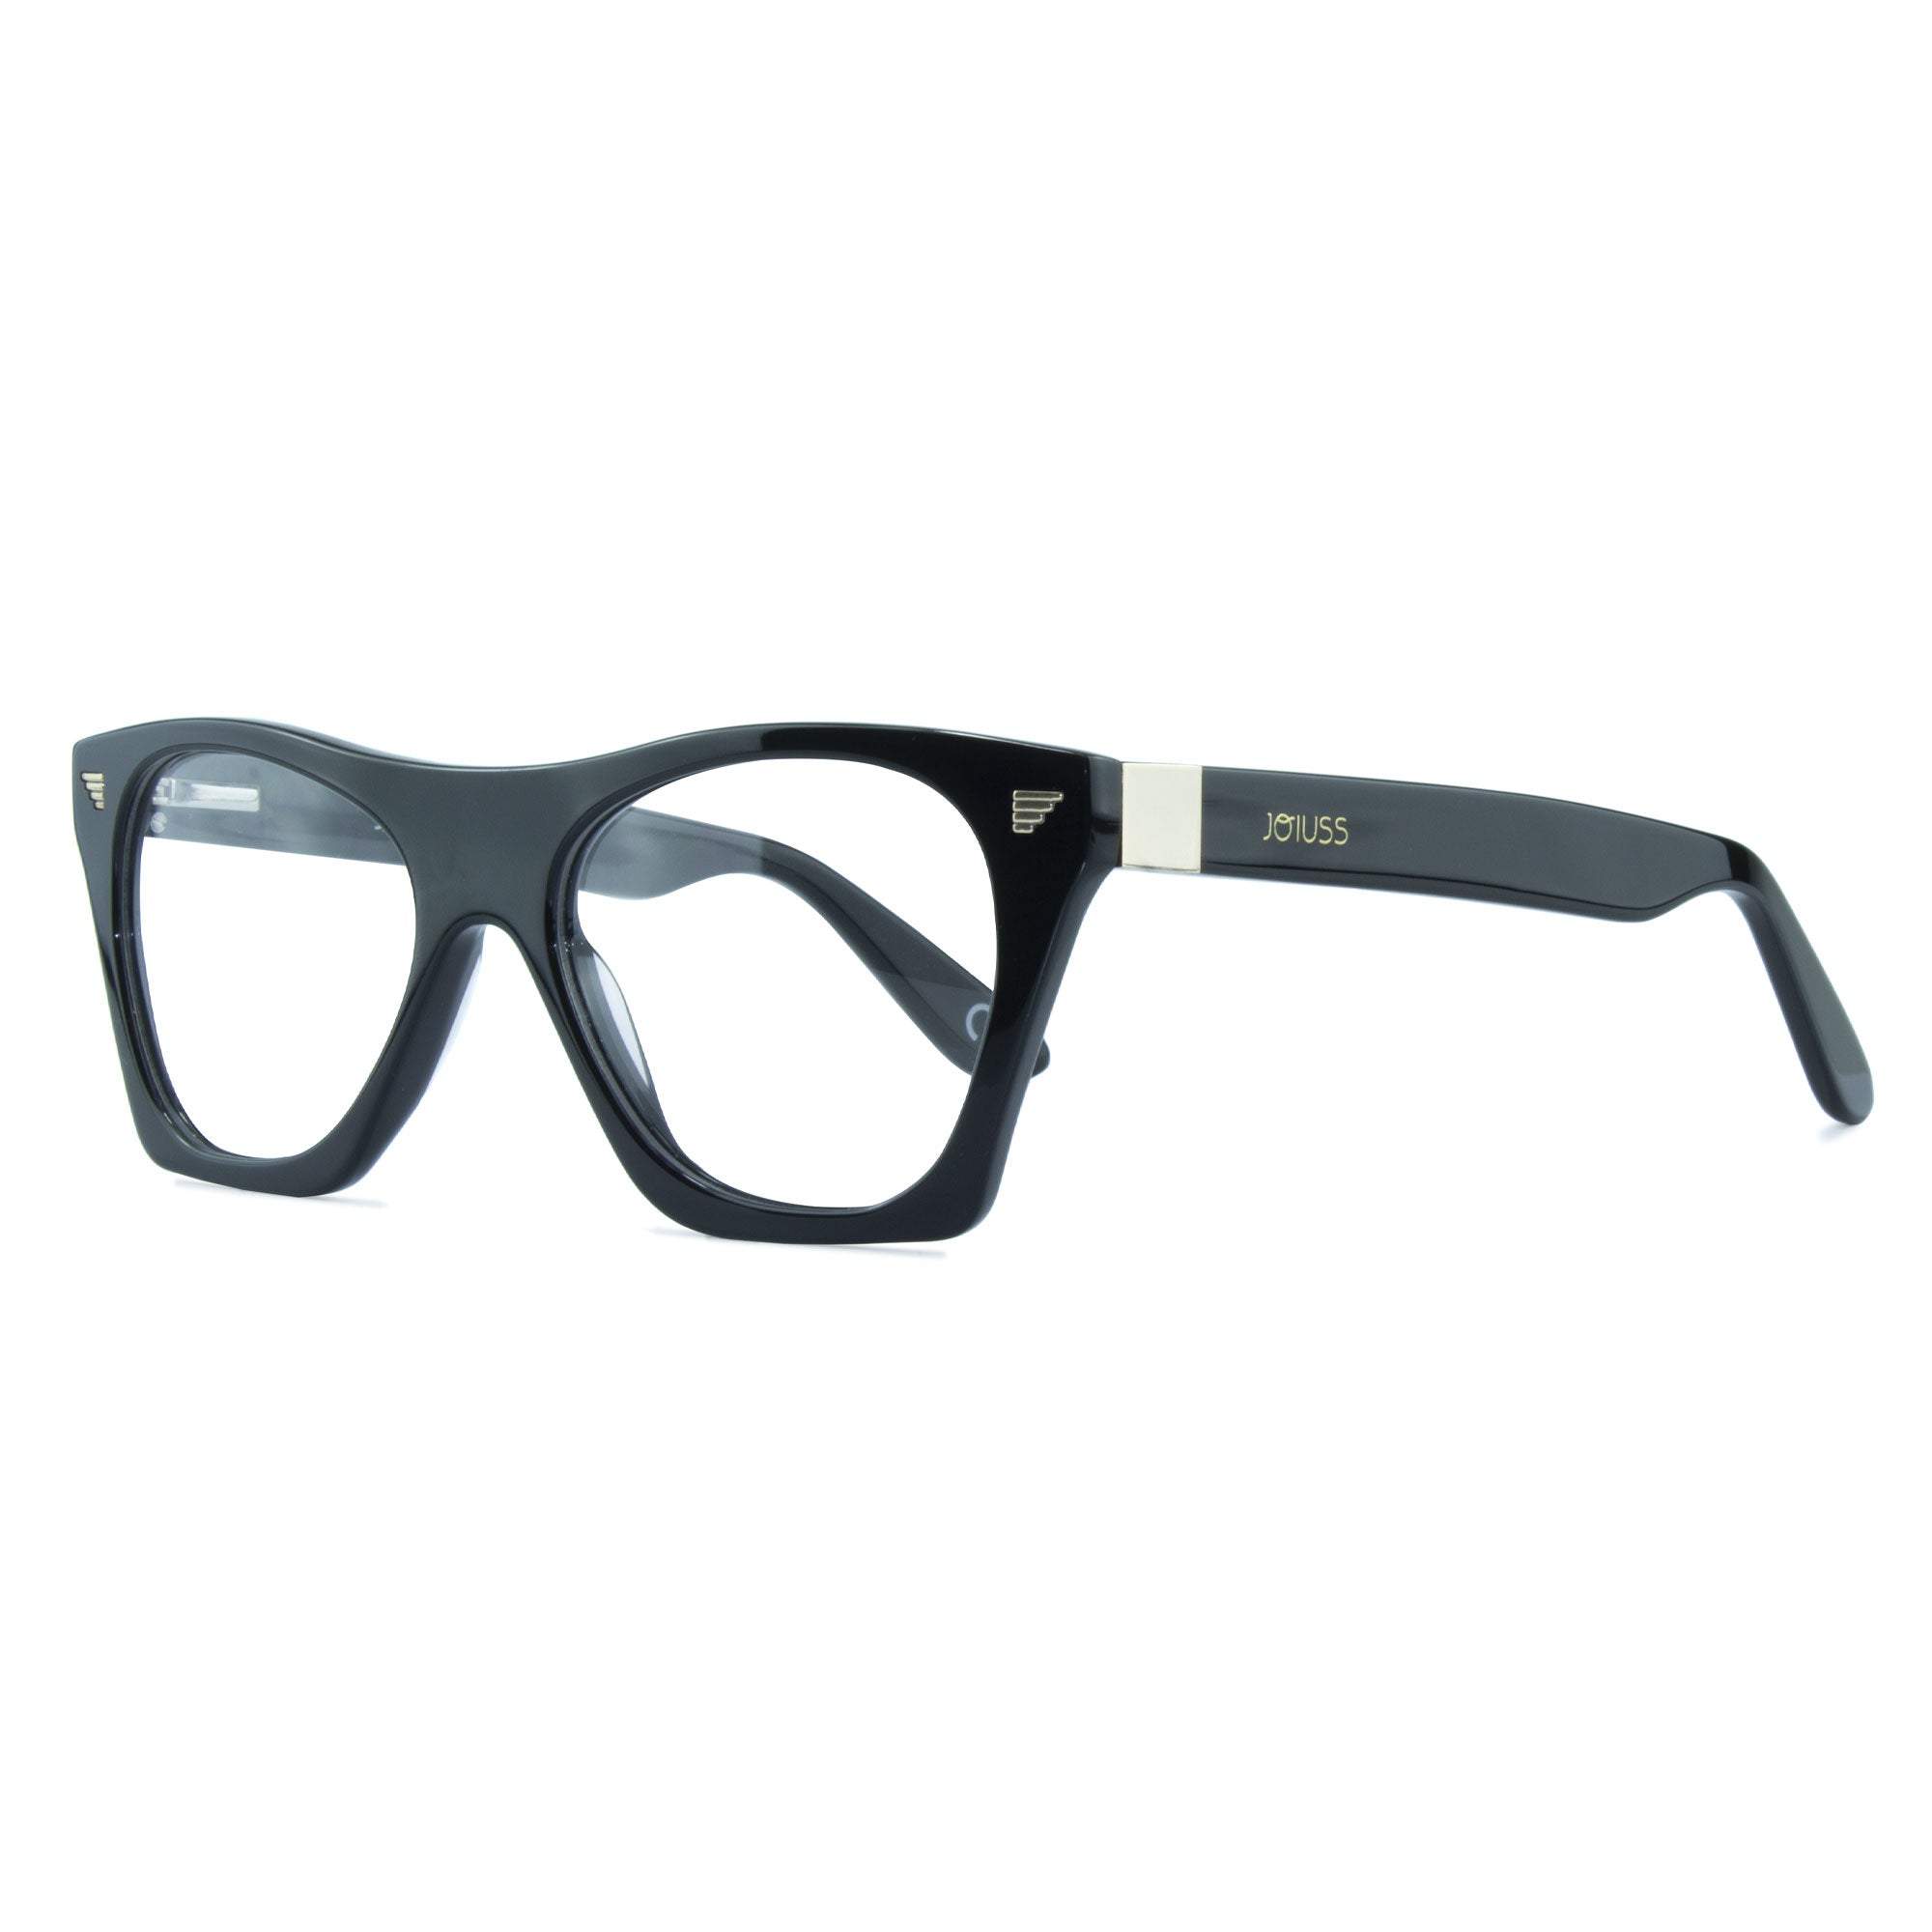 Horn Rimmed Glasses Frame - Black - Oscar